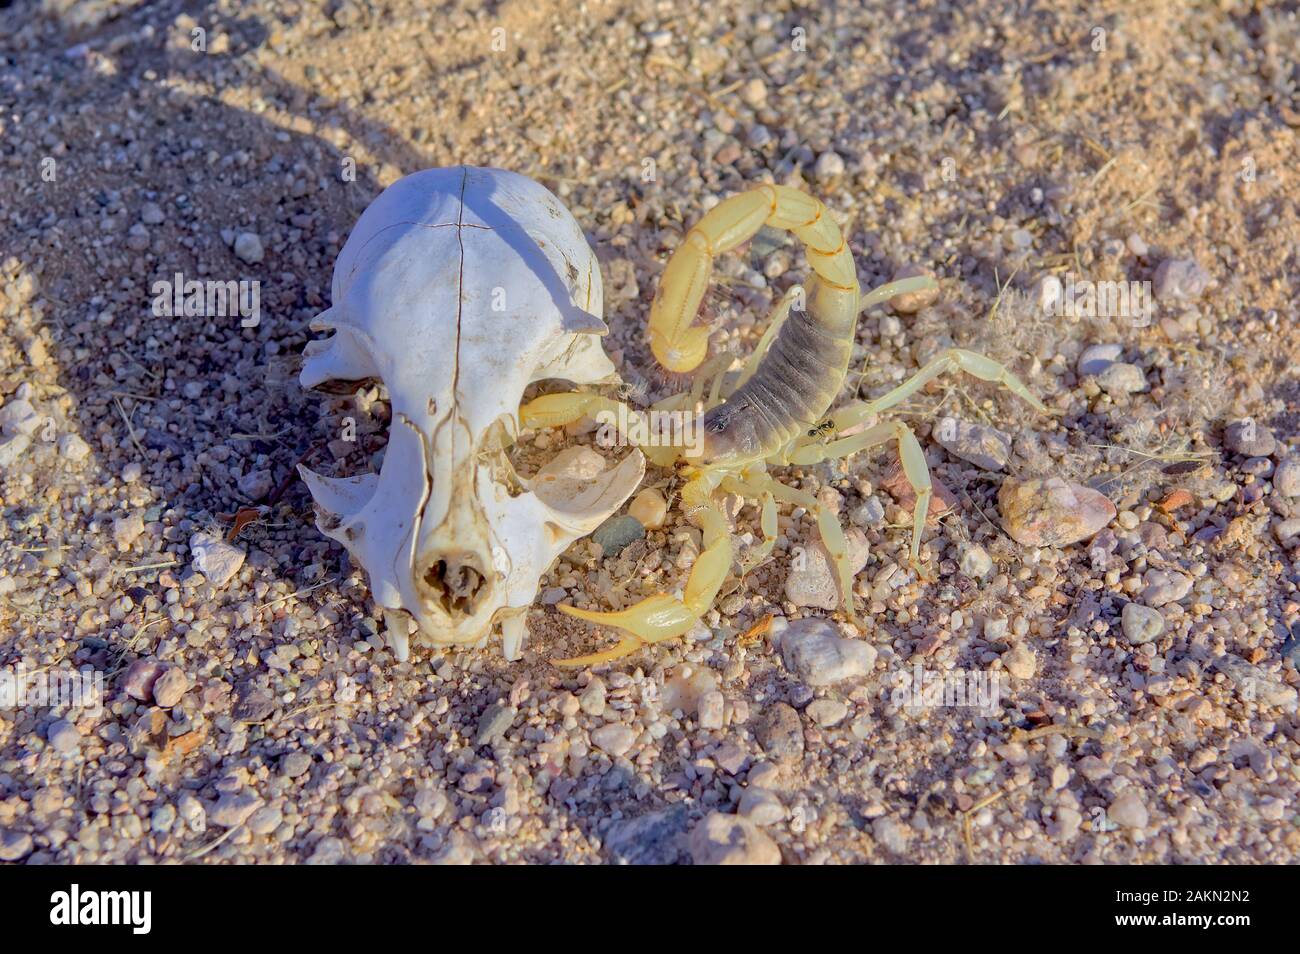 A Giant Hairy Scorpion native to Arizona protecting an animal skull. Stock Photo